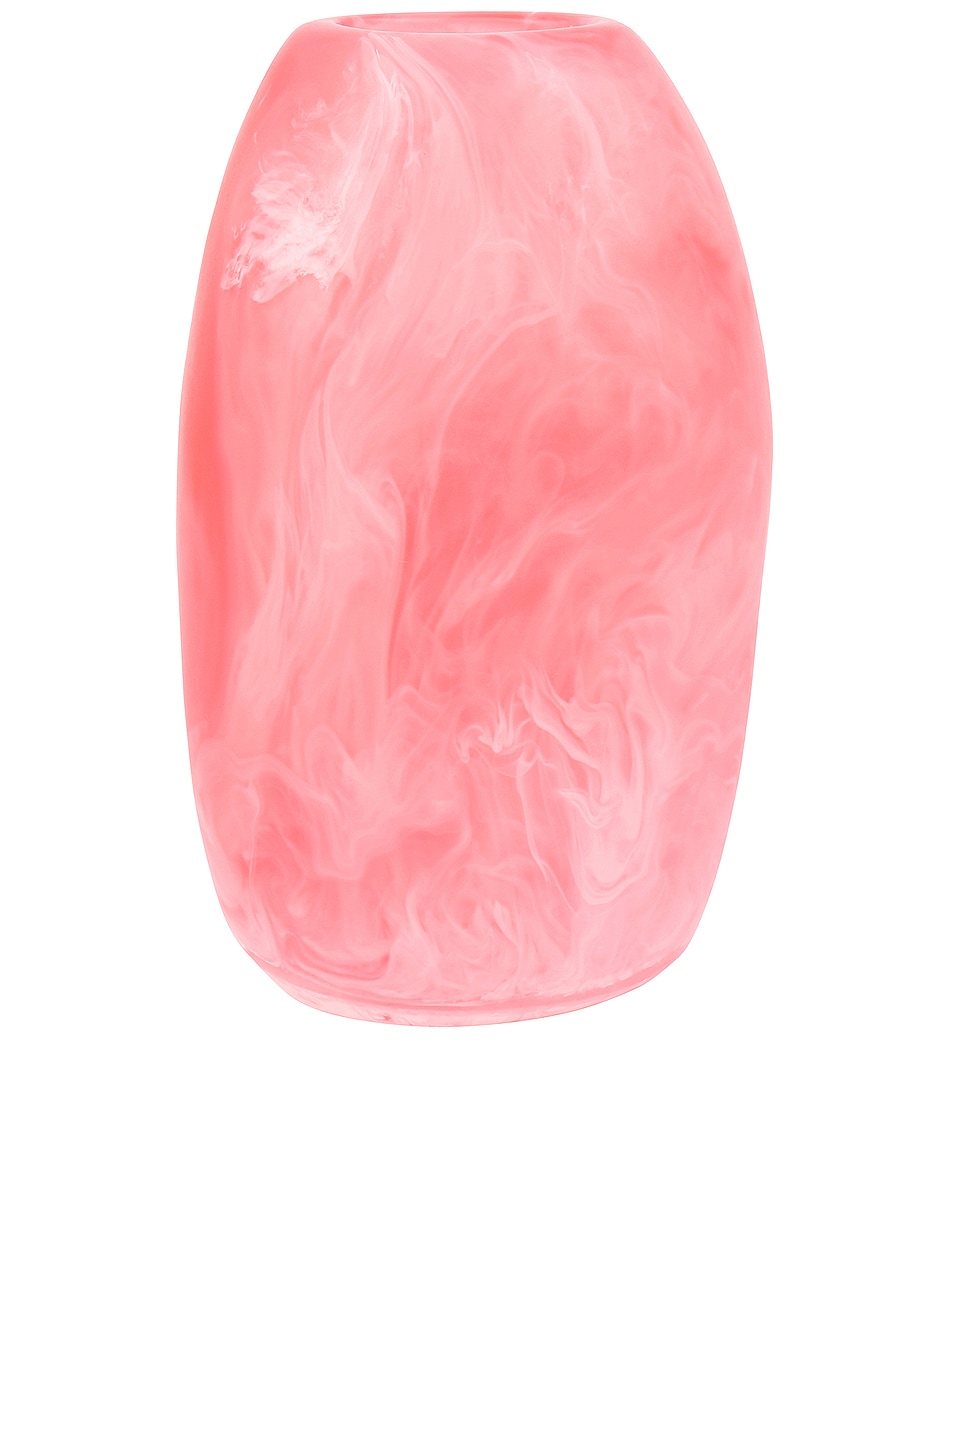 Image 1 of DINOSAUR DESIGNS Medium Pebble Vase in Pink Guava